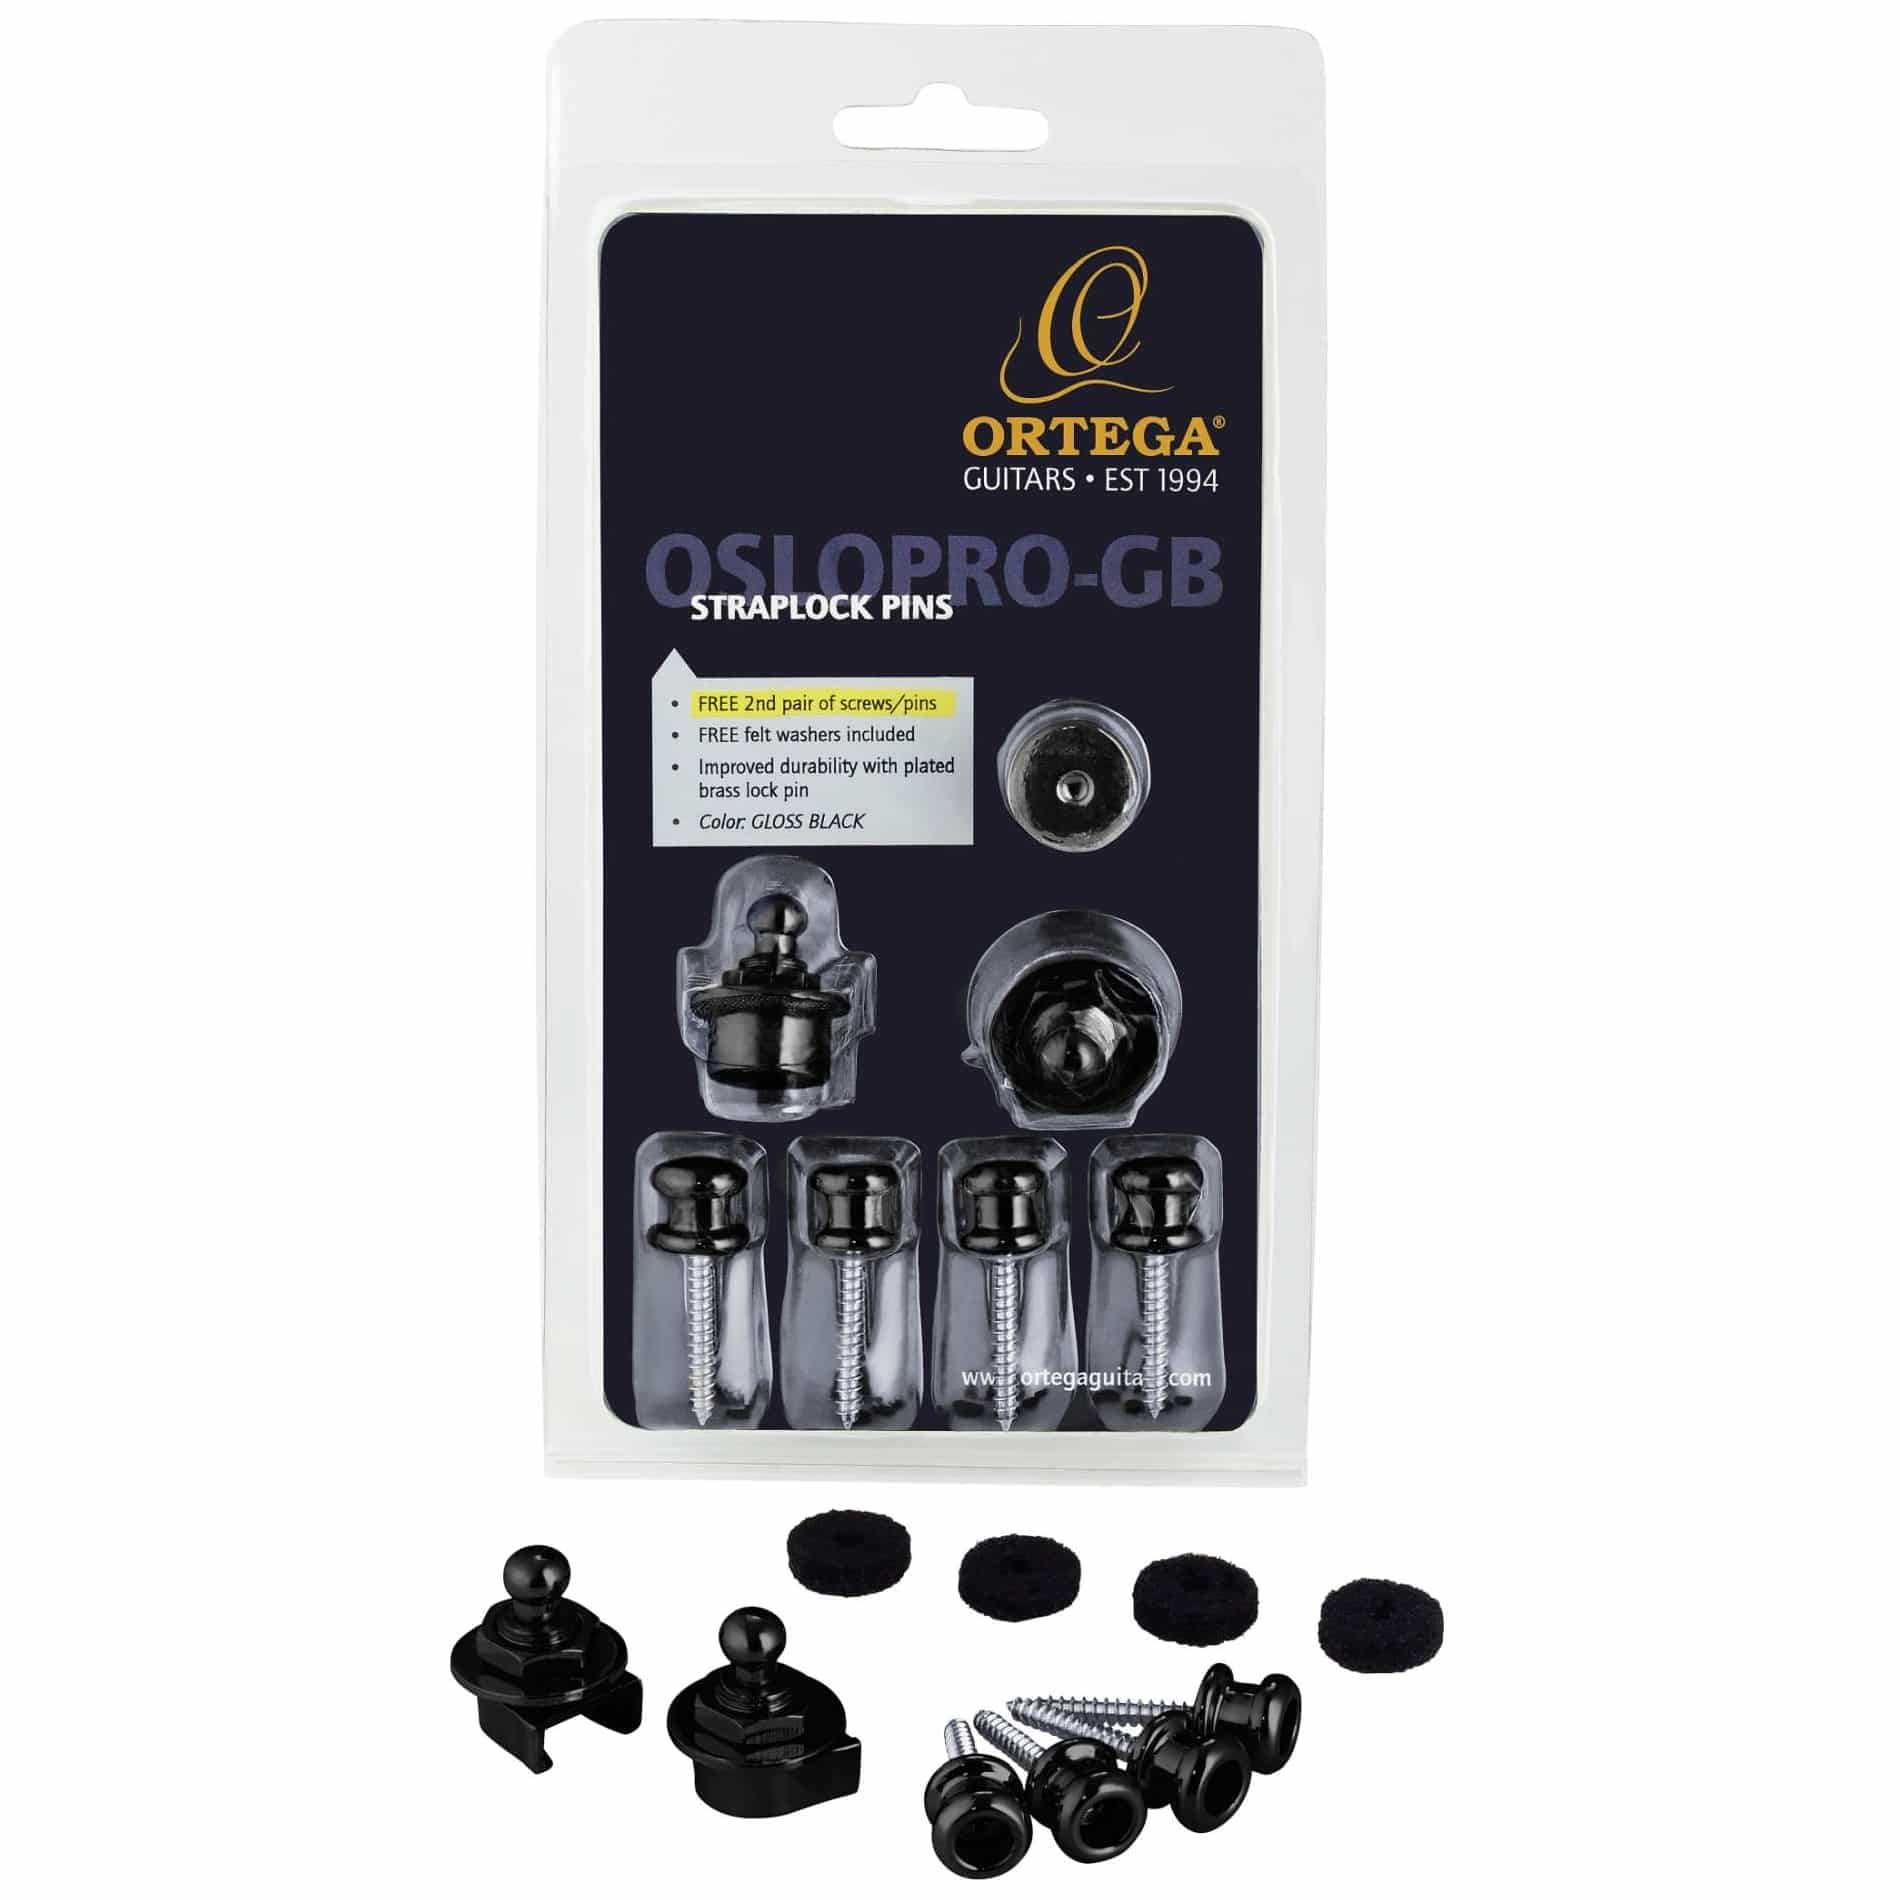 Ortega OSLOPRO-GB Strap Lock Pins Pro Gloss Black